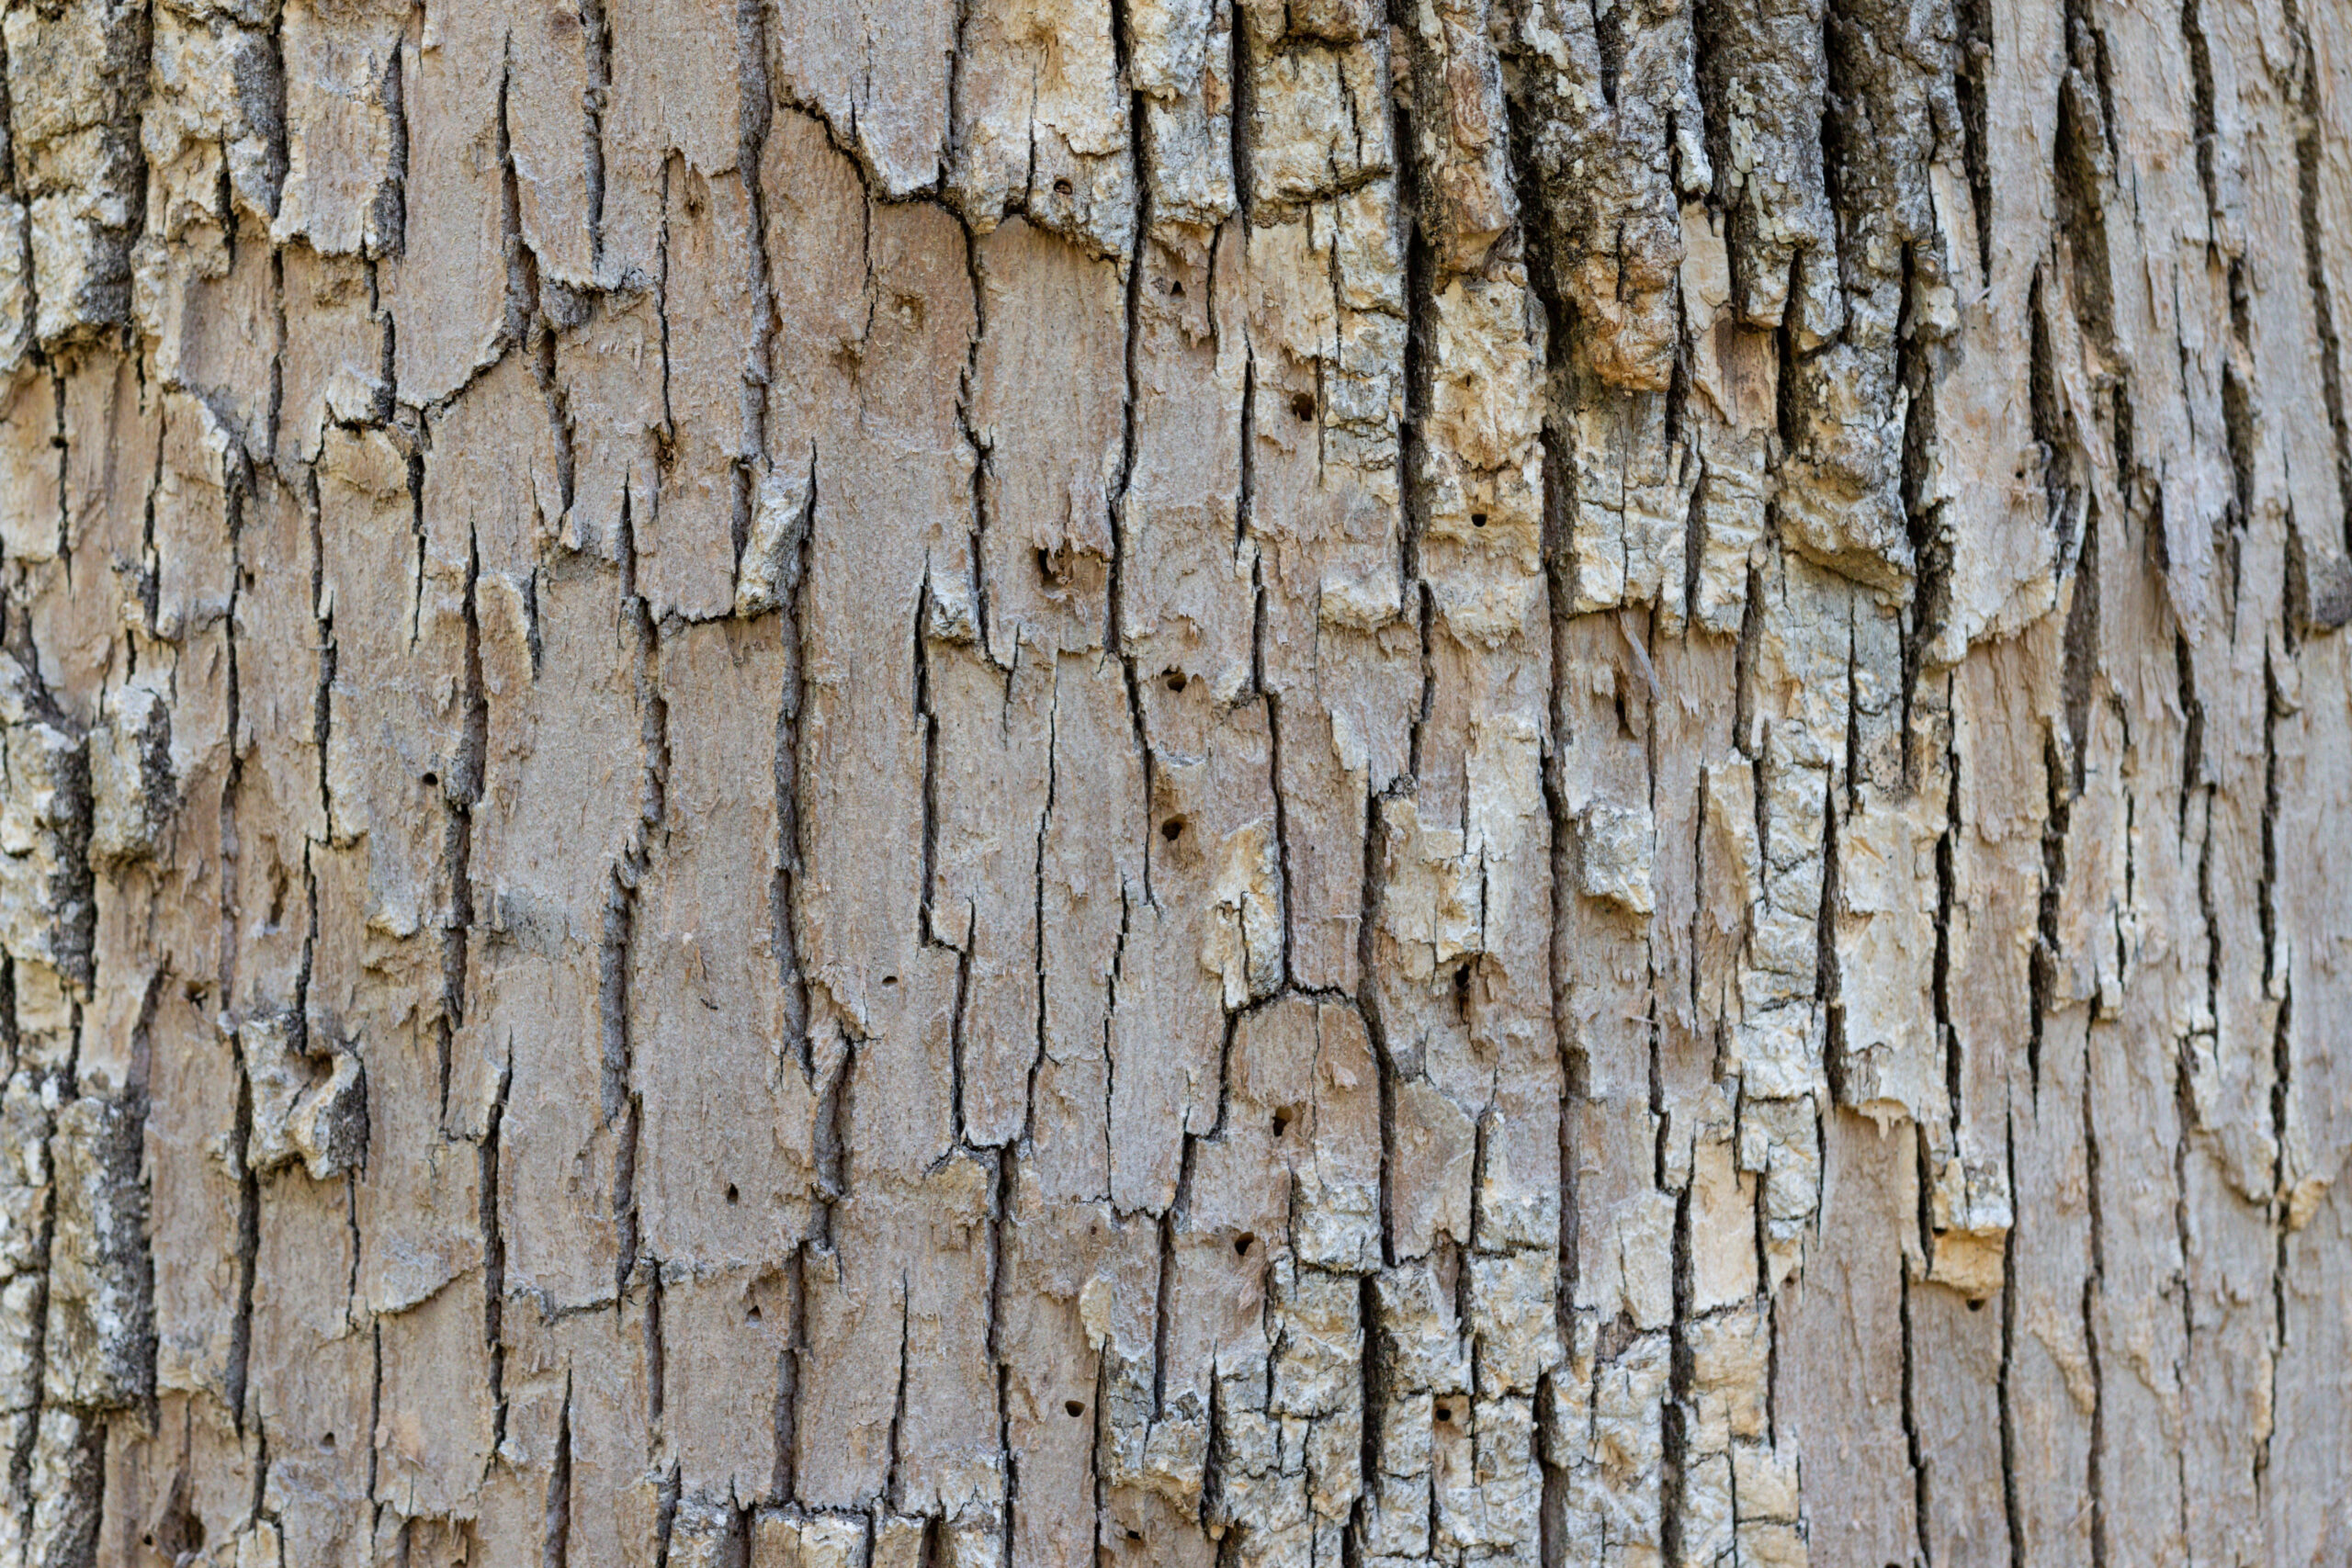 Emerald ash borer tree treatment